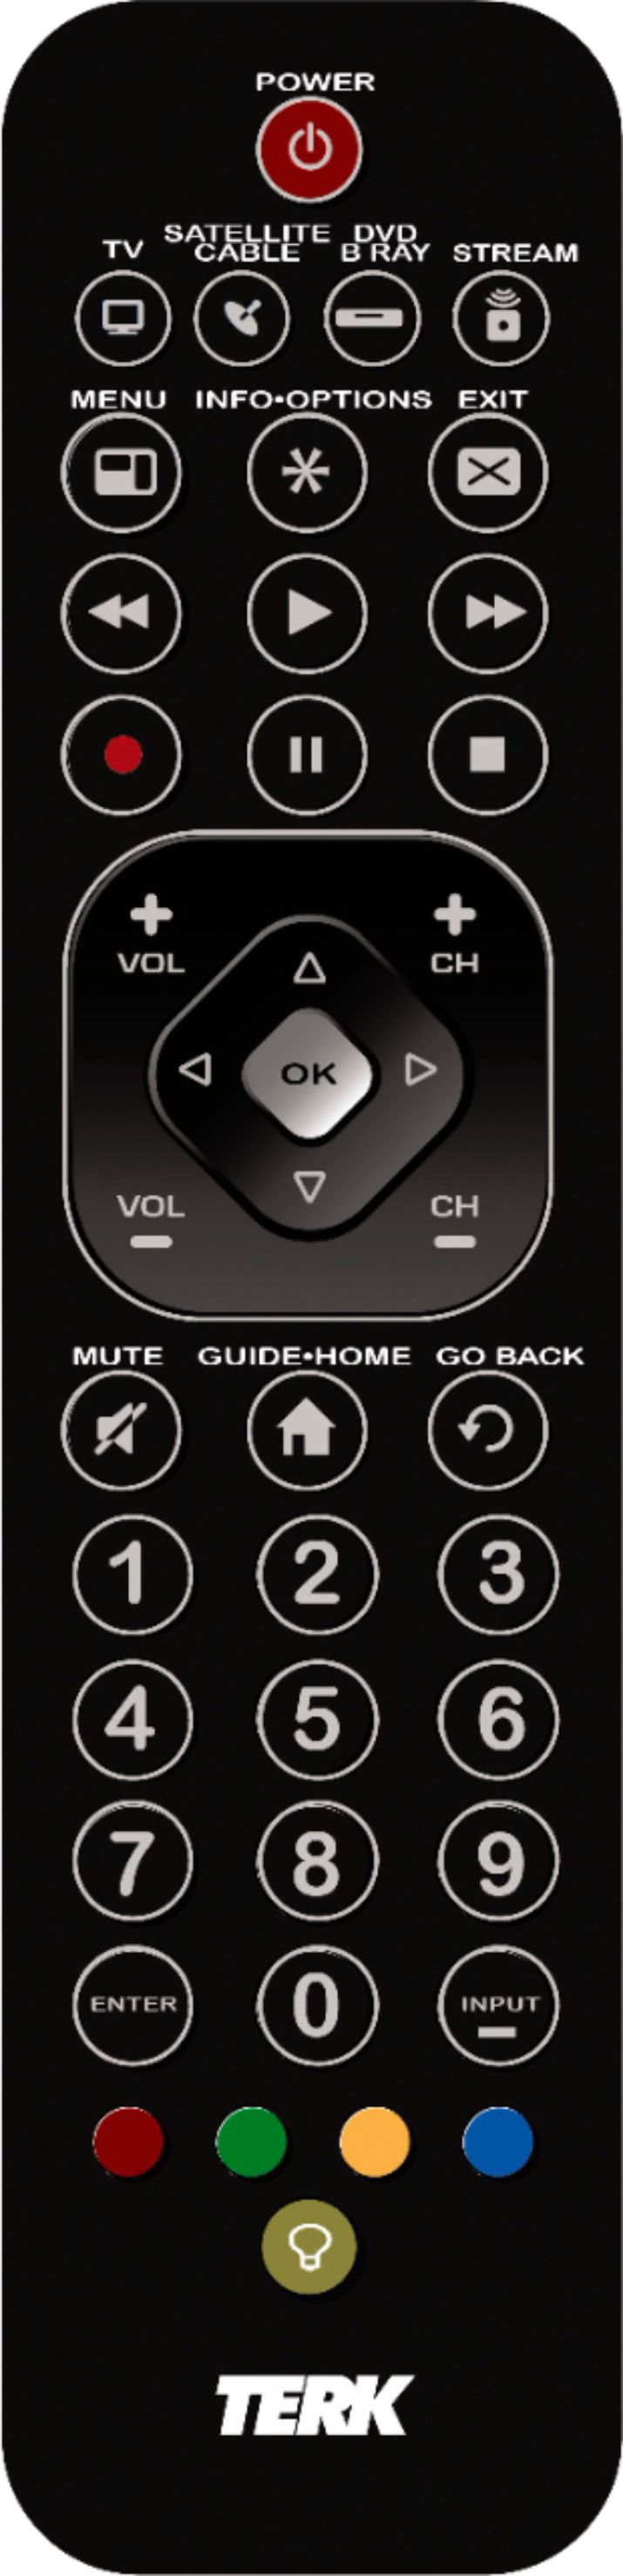 nintendo switch universal remote